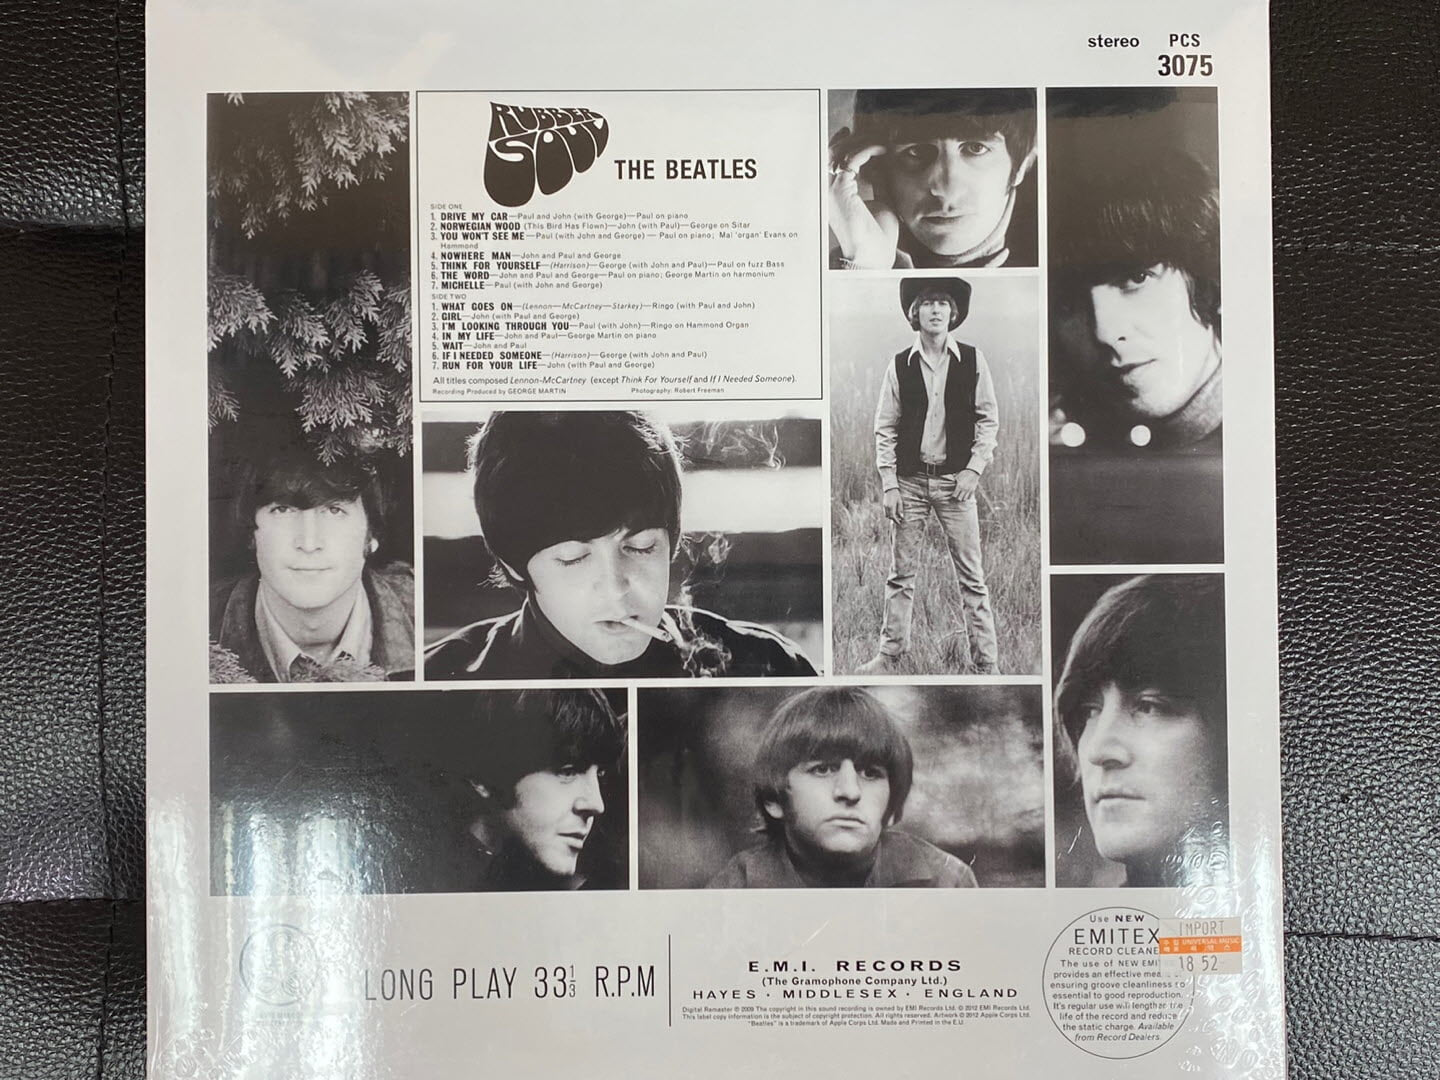 [LP] 비틀즈 - The Beatles - Rubber Soul Ver.2 LP [2012년] [180G] [미개봉] [E.U반]